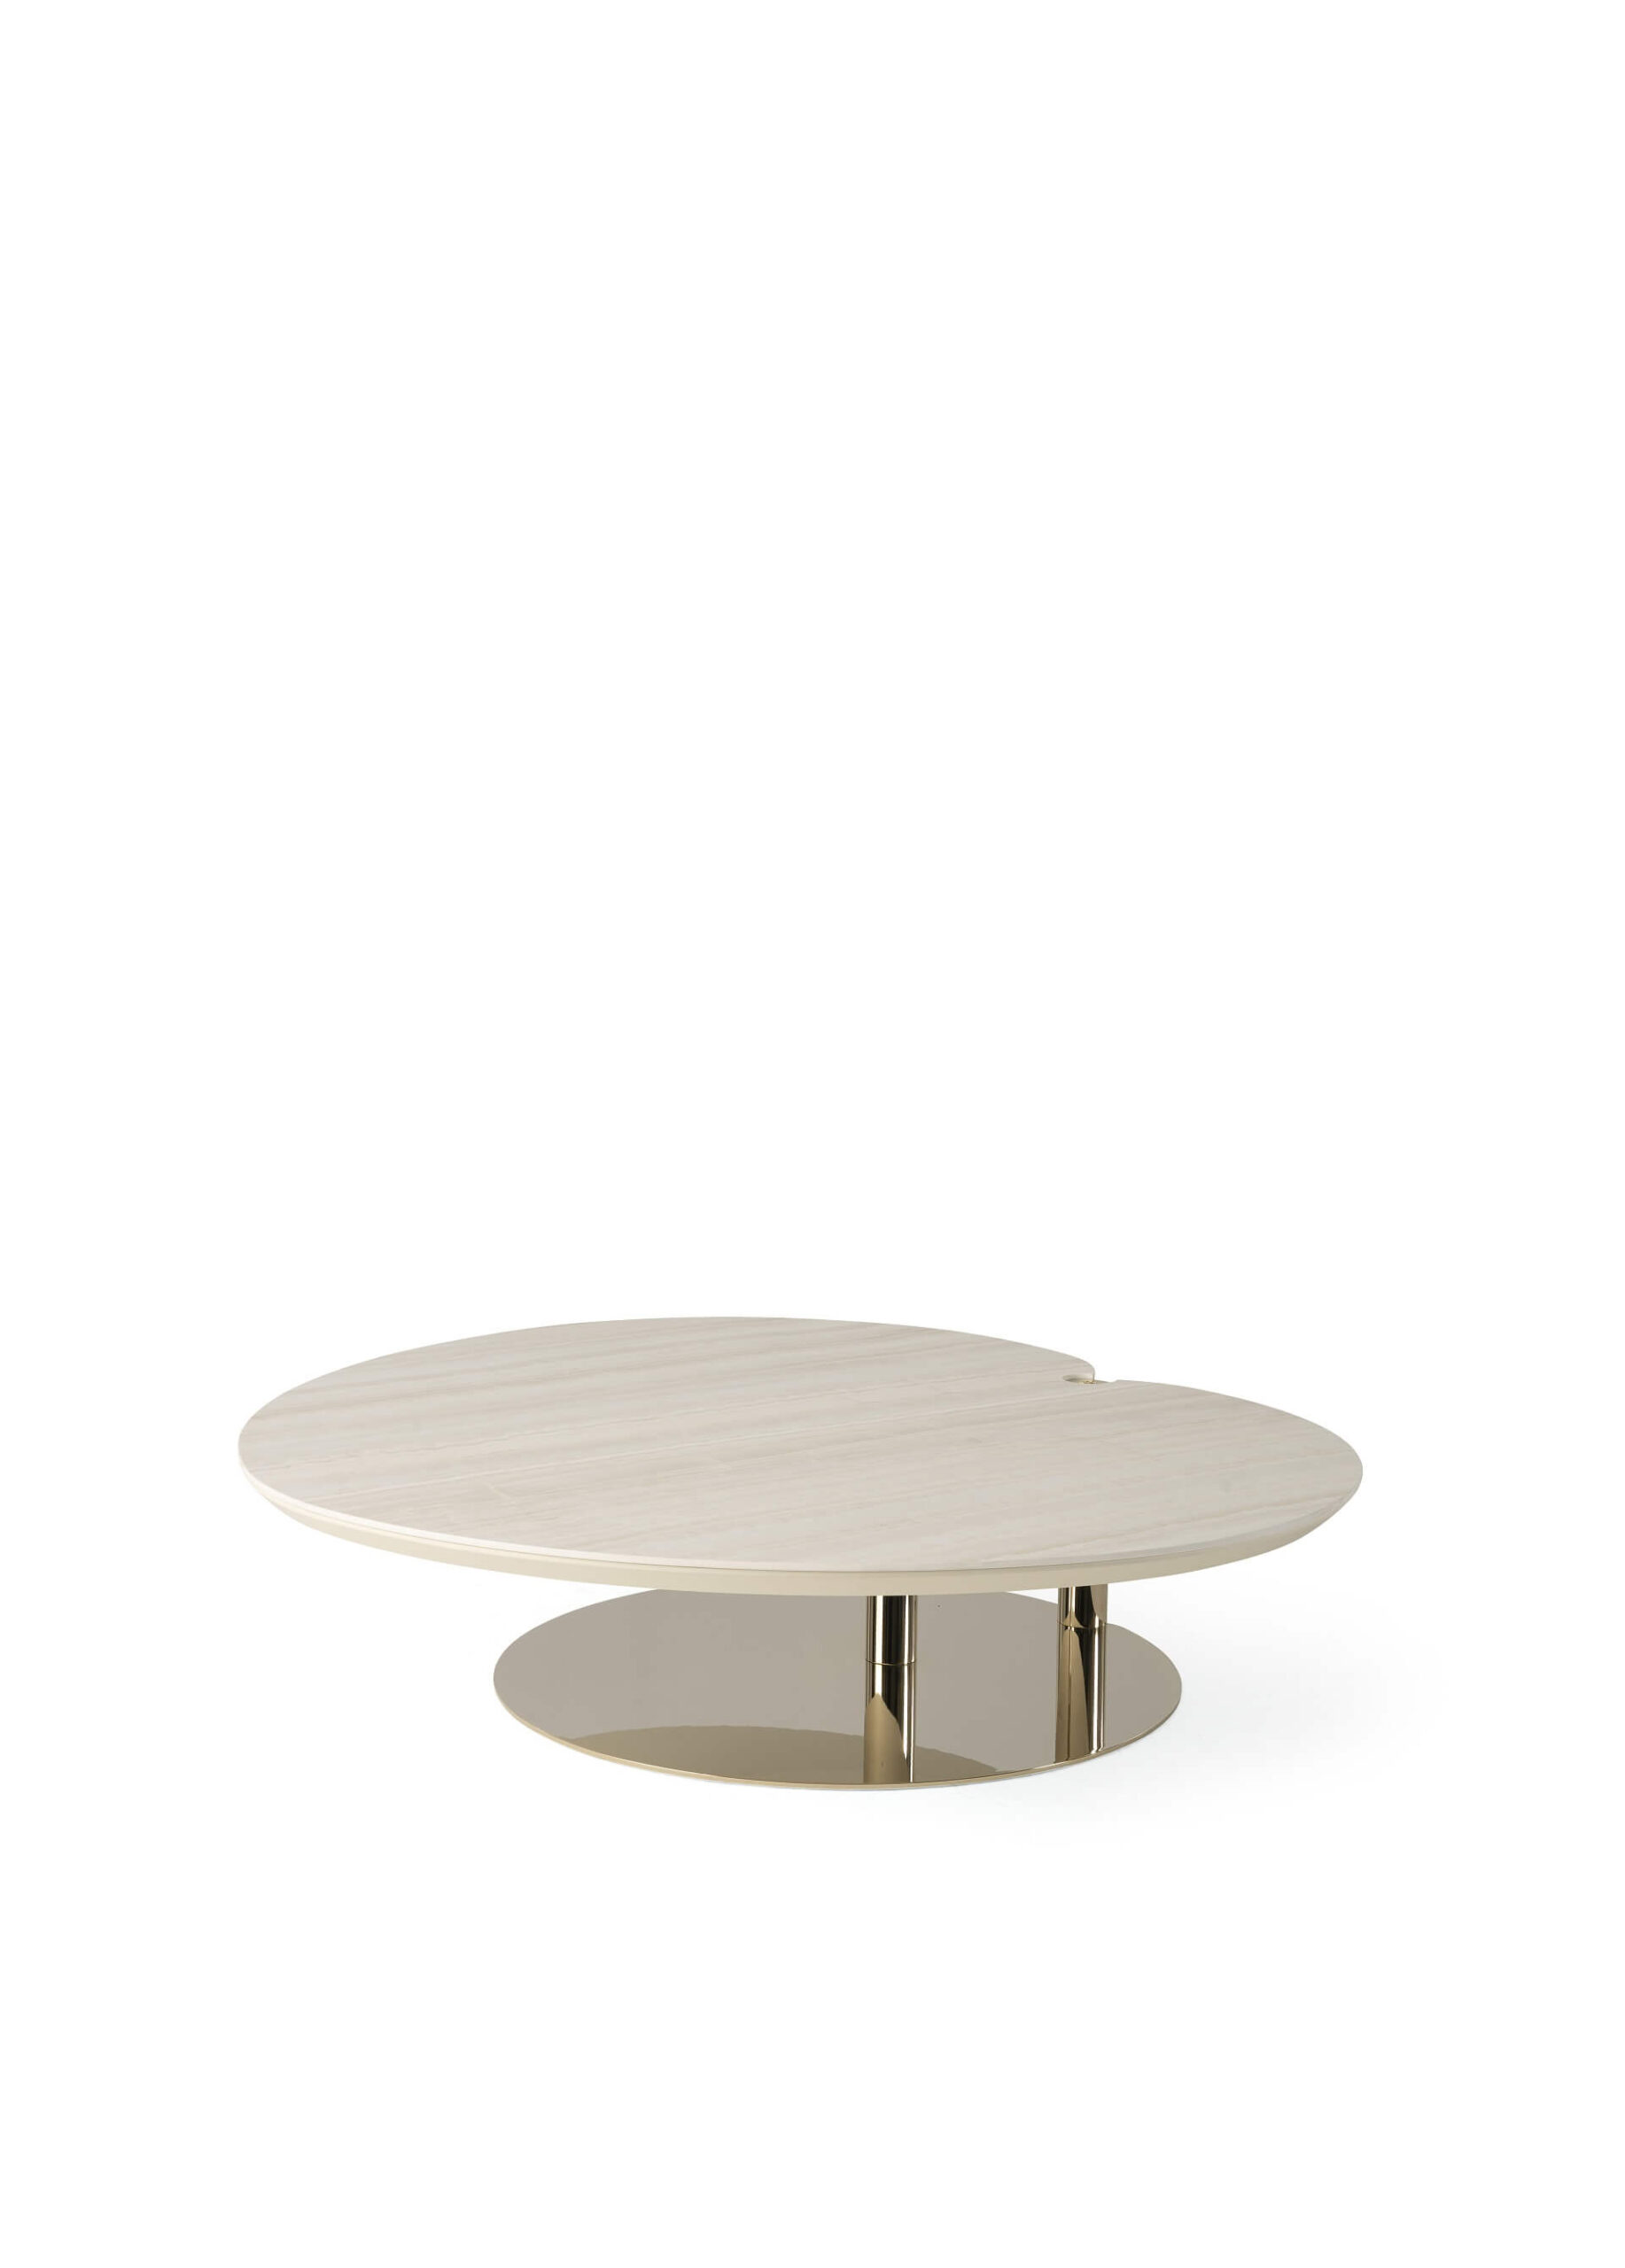 Roberto Cavalli Home Interiors_Paje low table